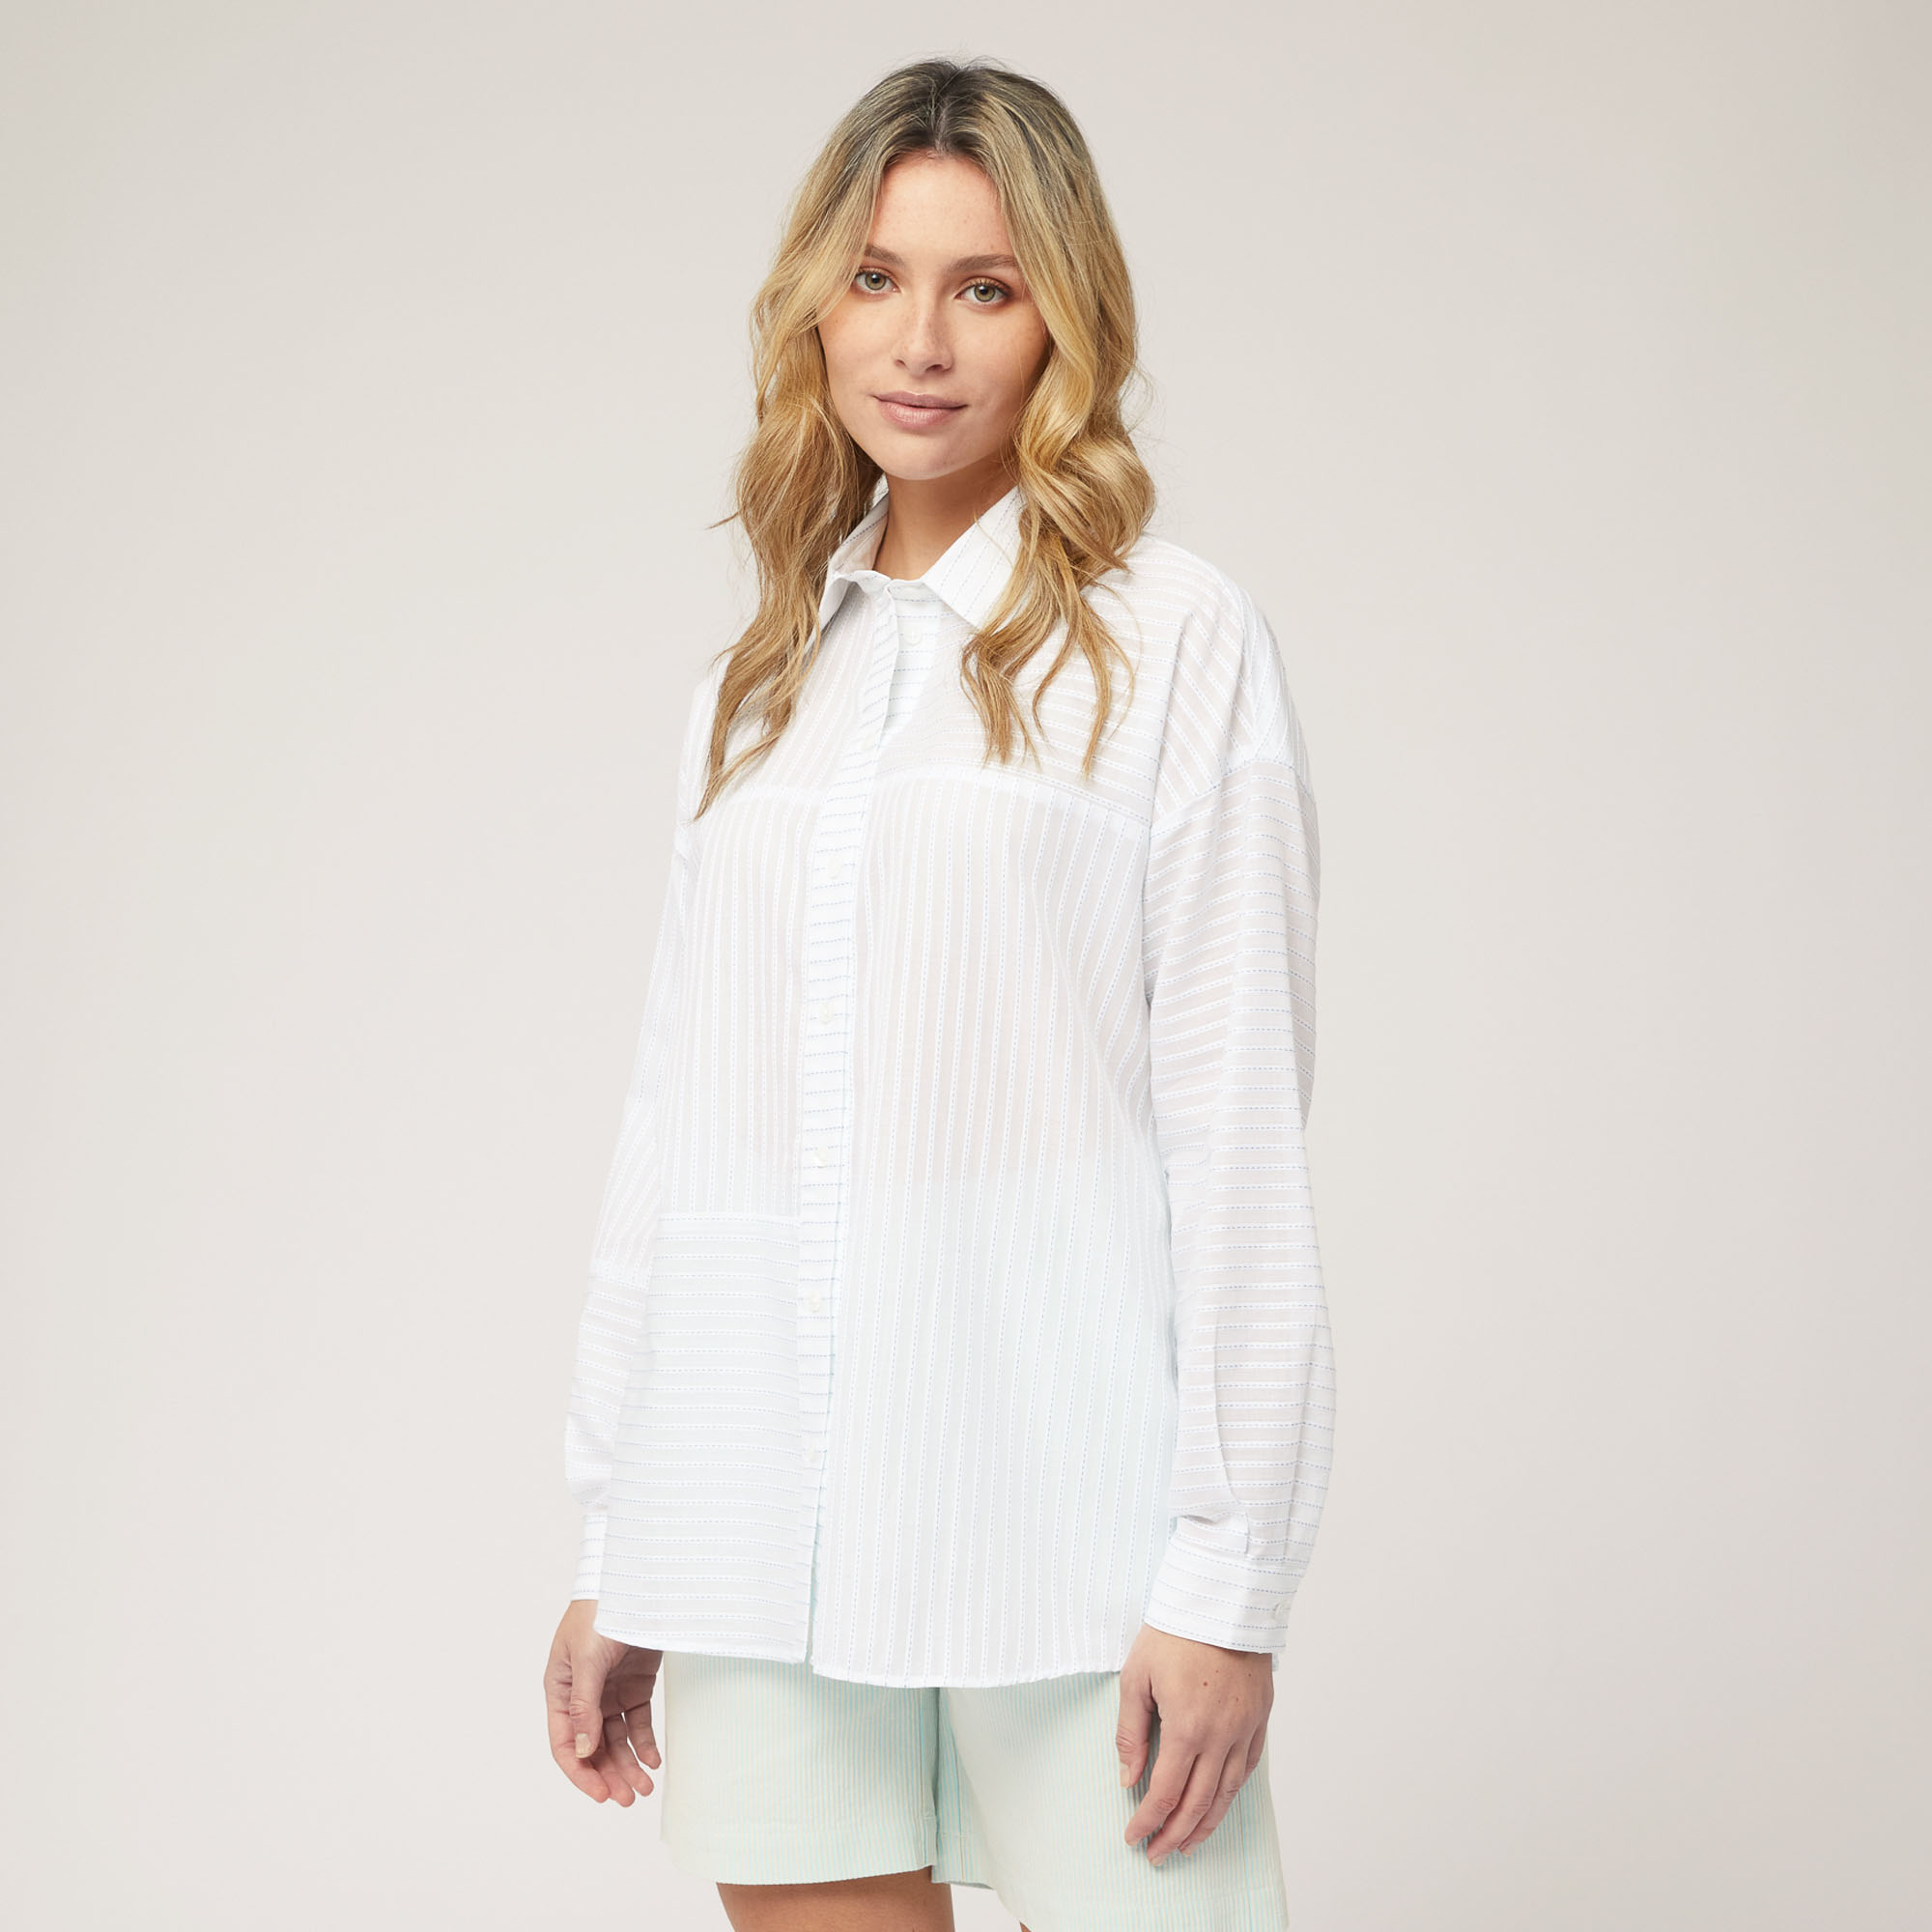 Soft Shirt with Stitching, White, large image number 0